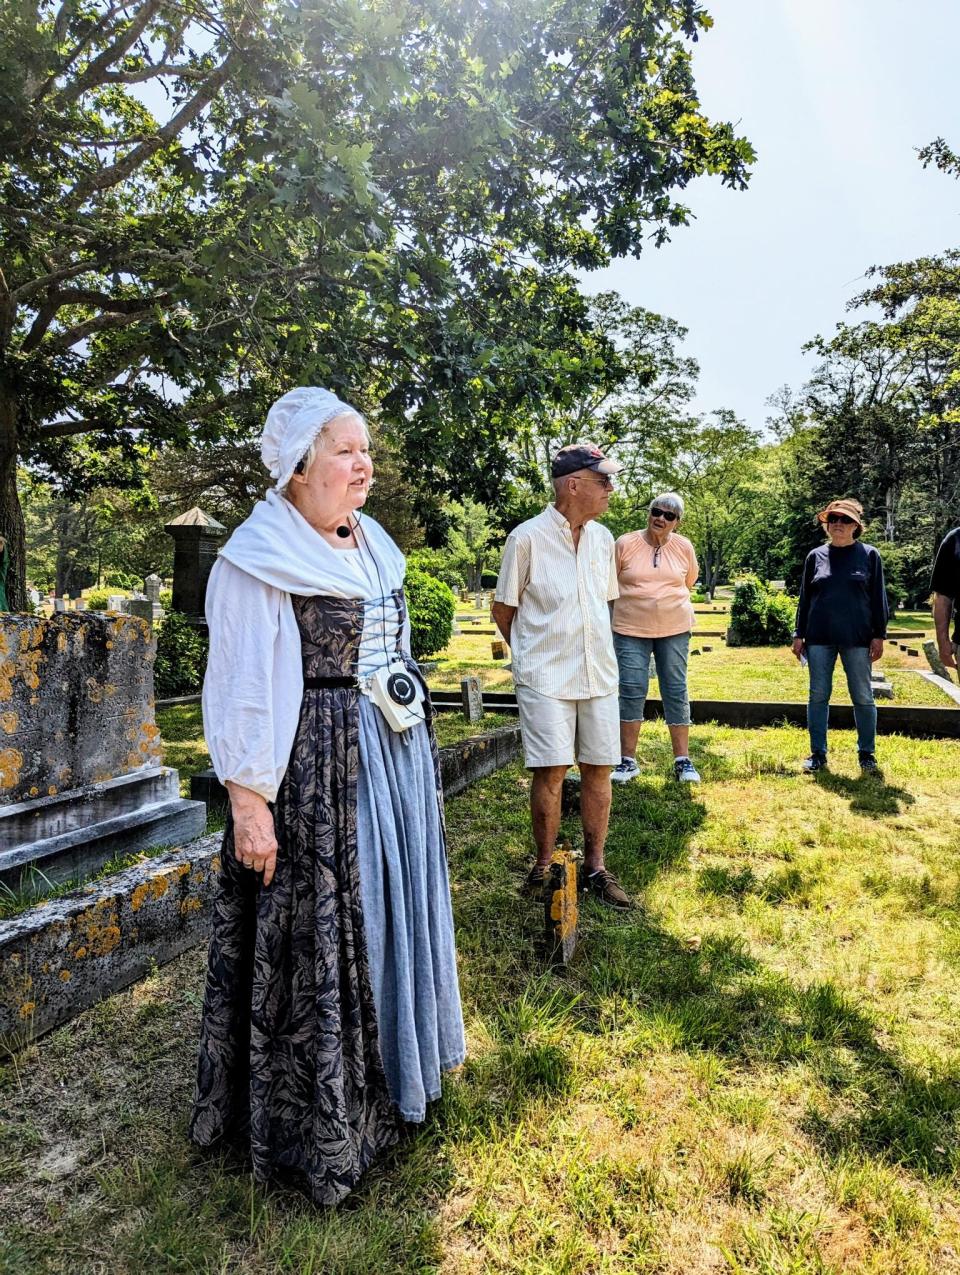 Local historian Terri Fox guides visitors on a one-hour walk through Dennis Village Cemetery.